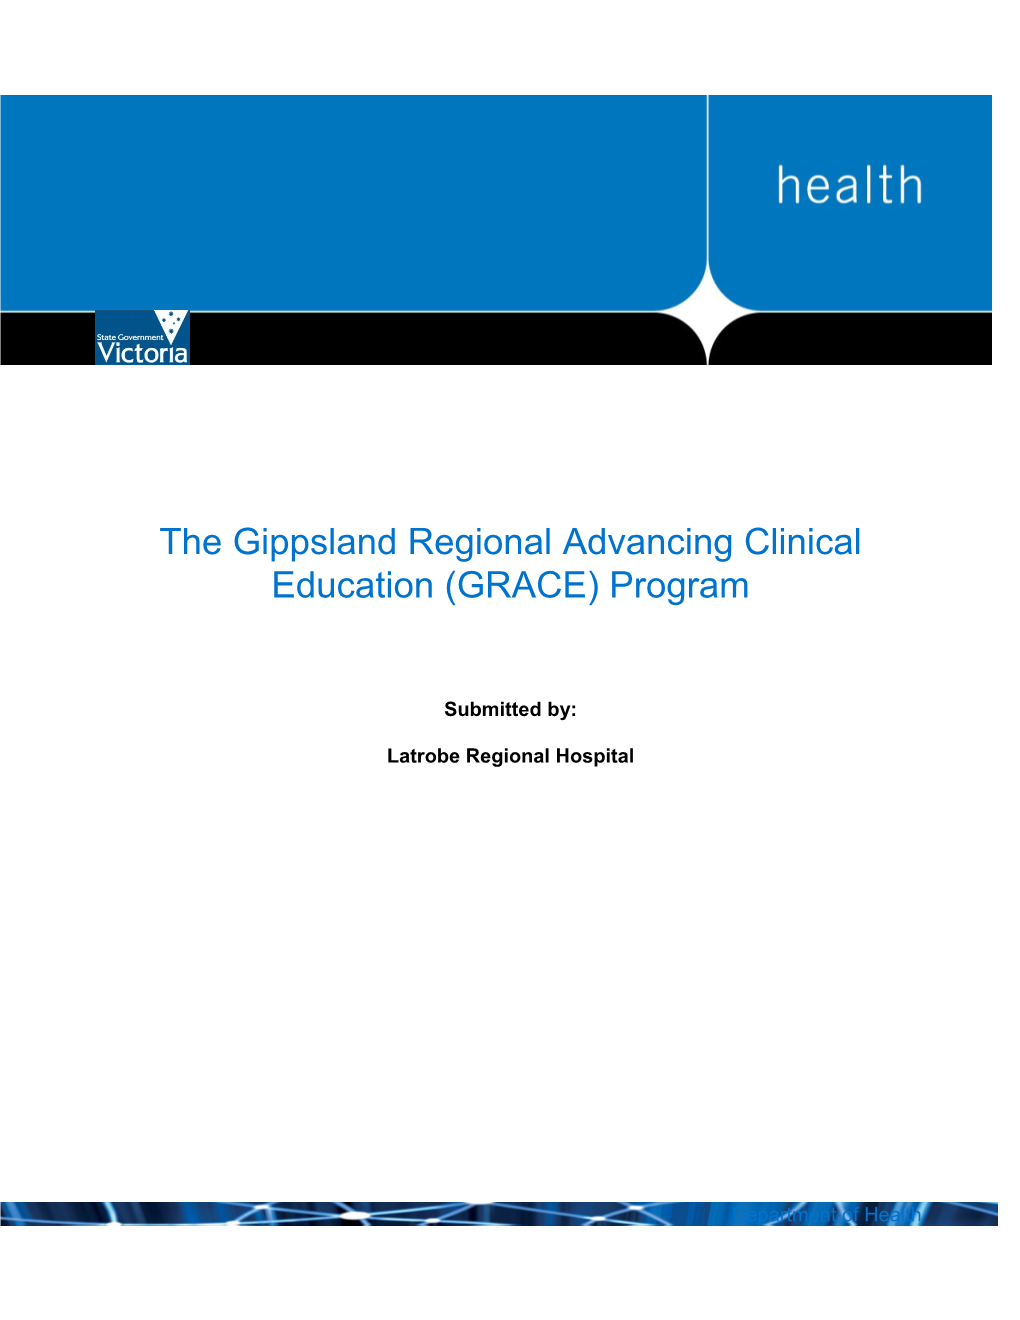 The Gippsland Regional Advancing Clinical Education (GRACE) Program